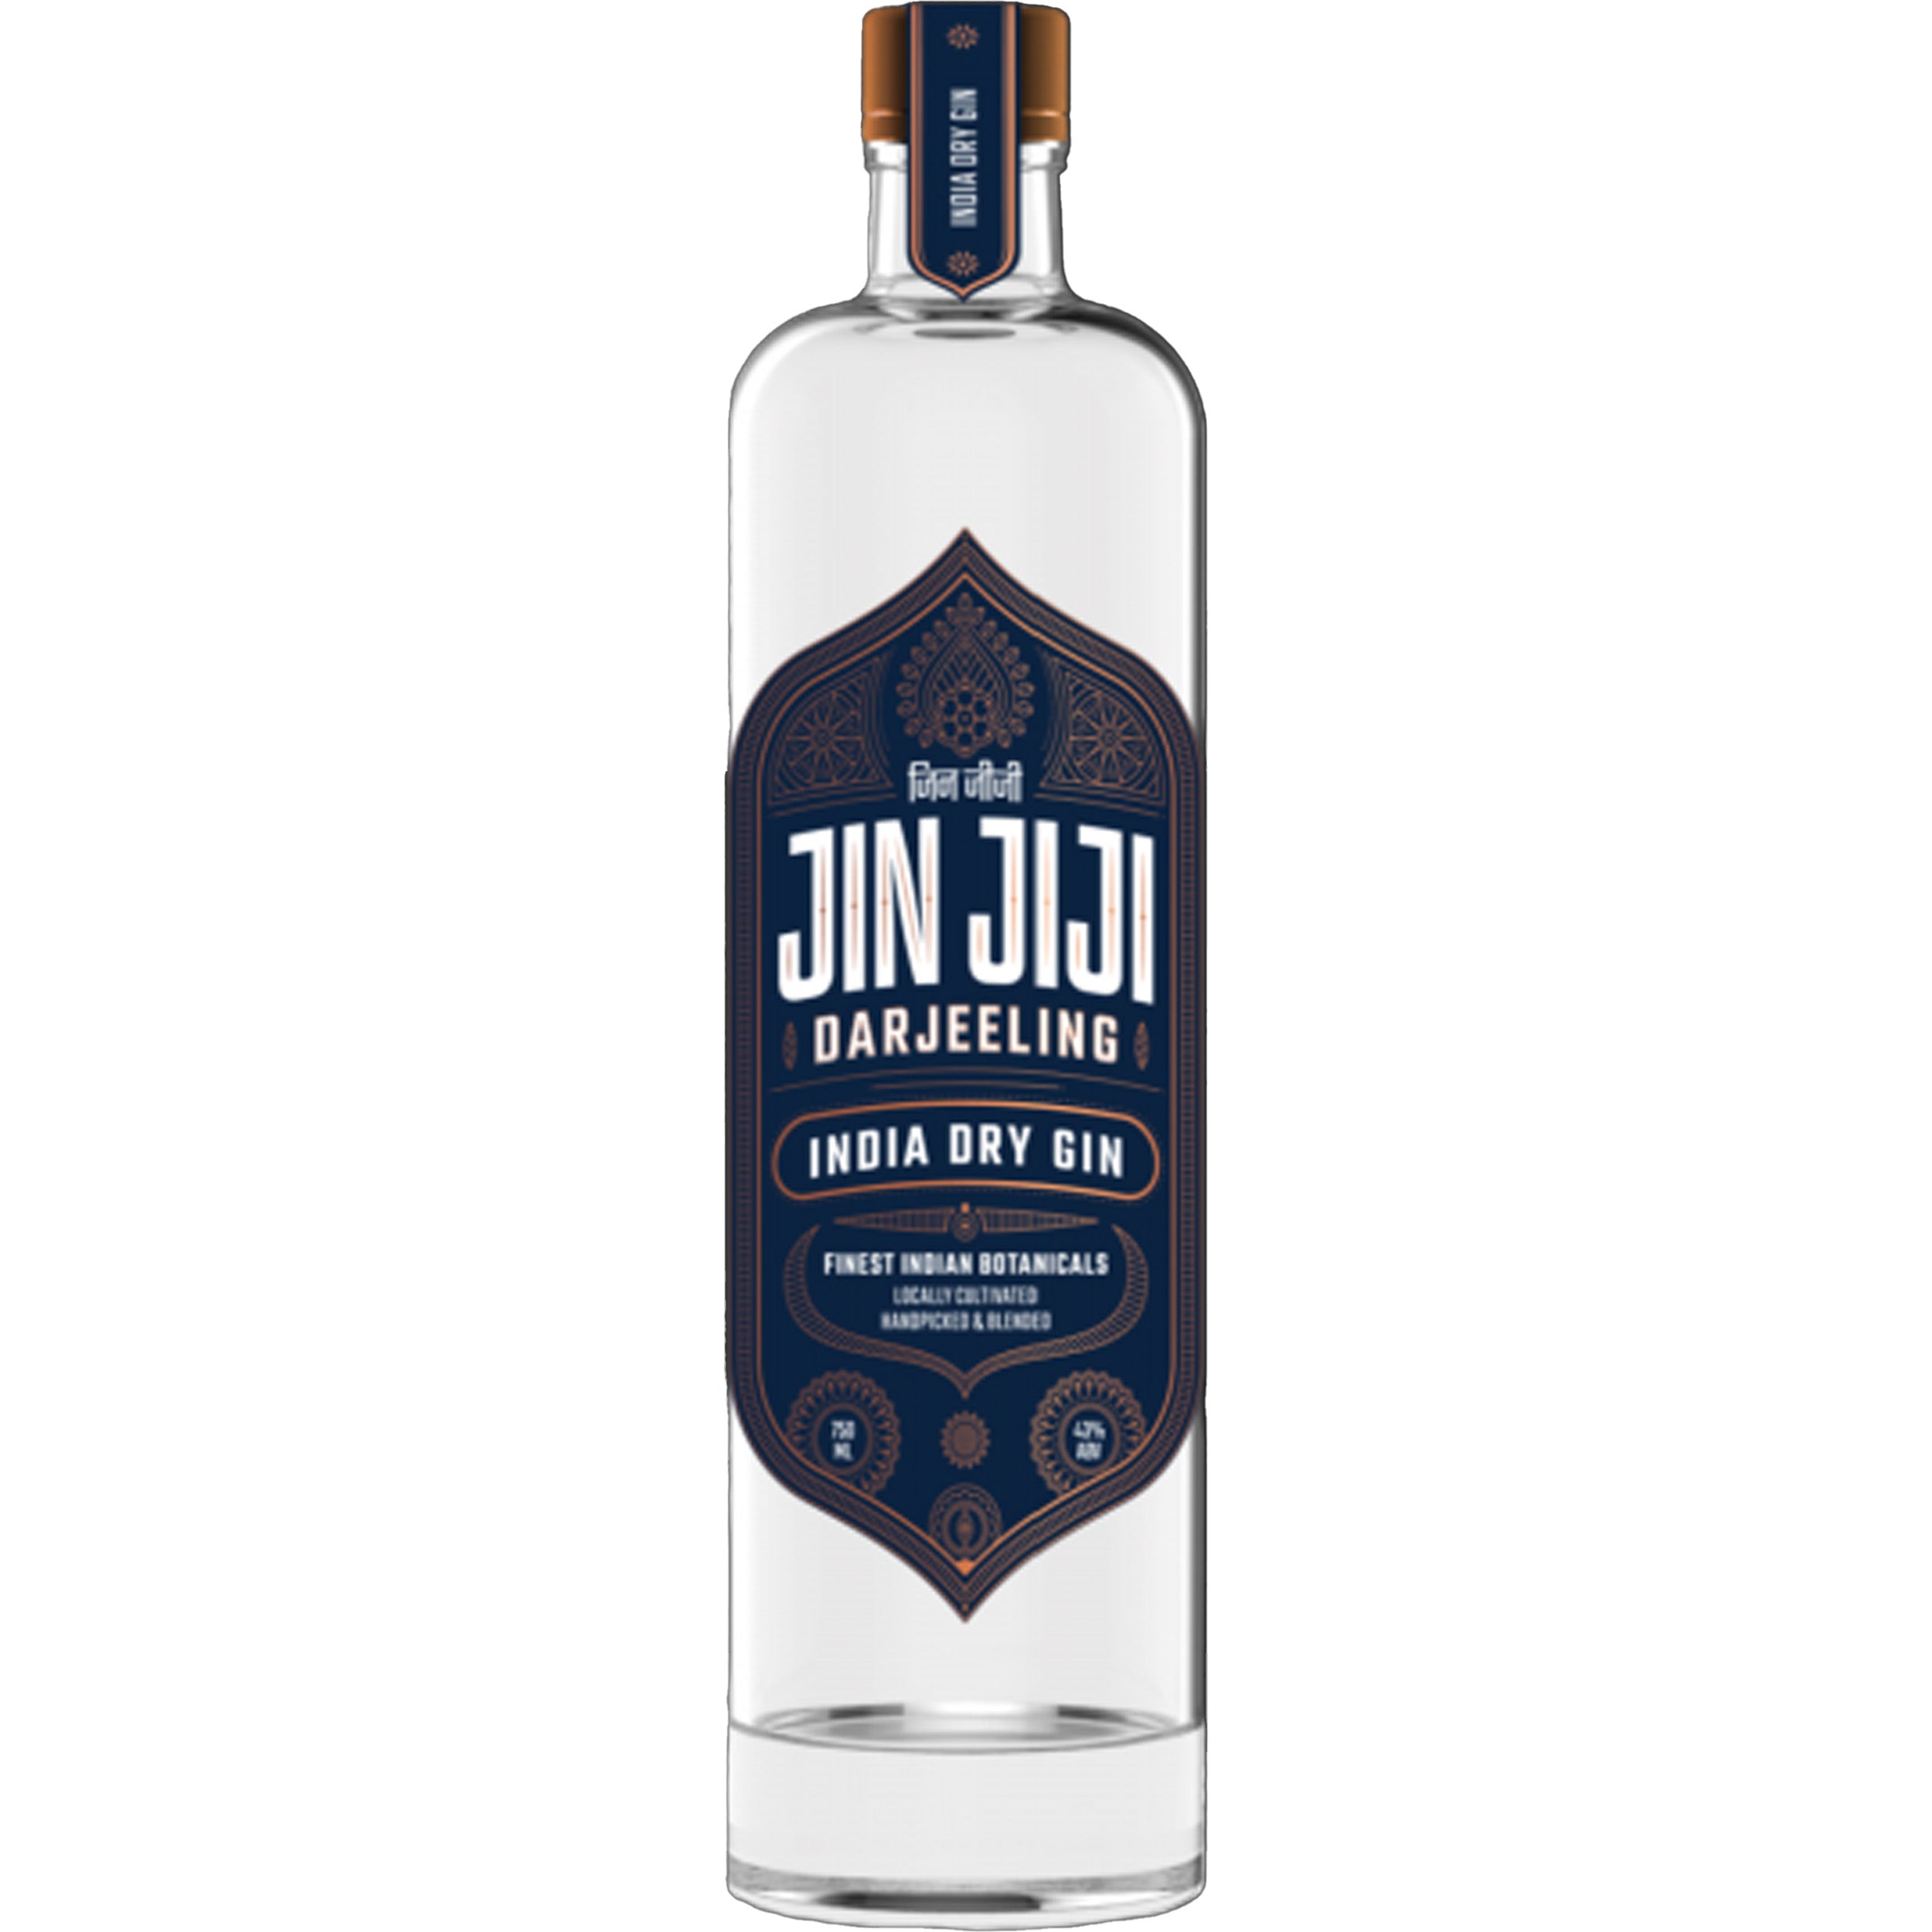 Jin Jiji Darjeeling – Dry Gin Chips Liquor India